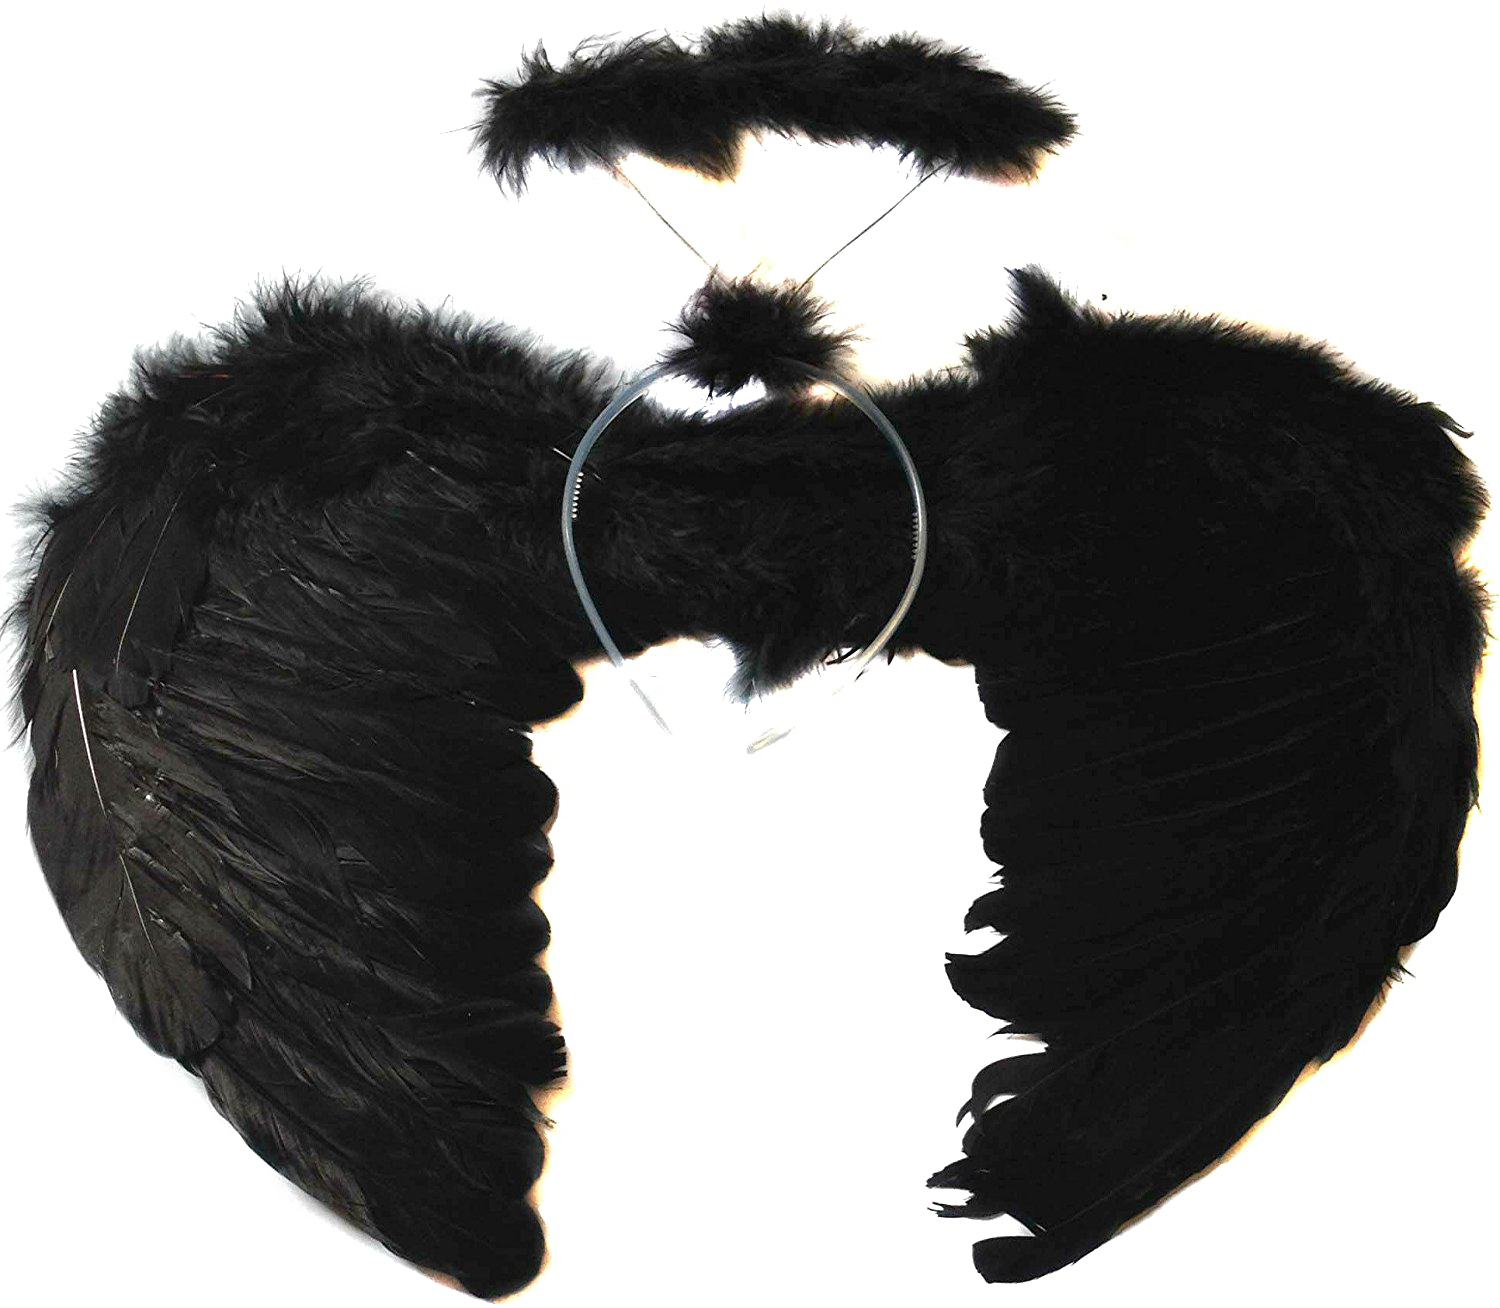 Black Angel Wings Transparent Image